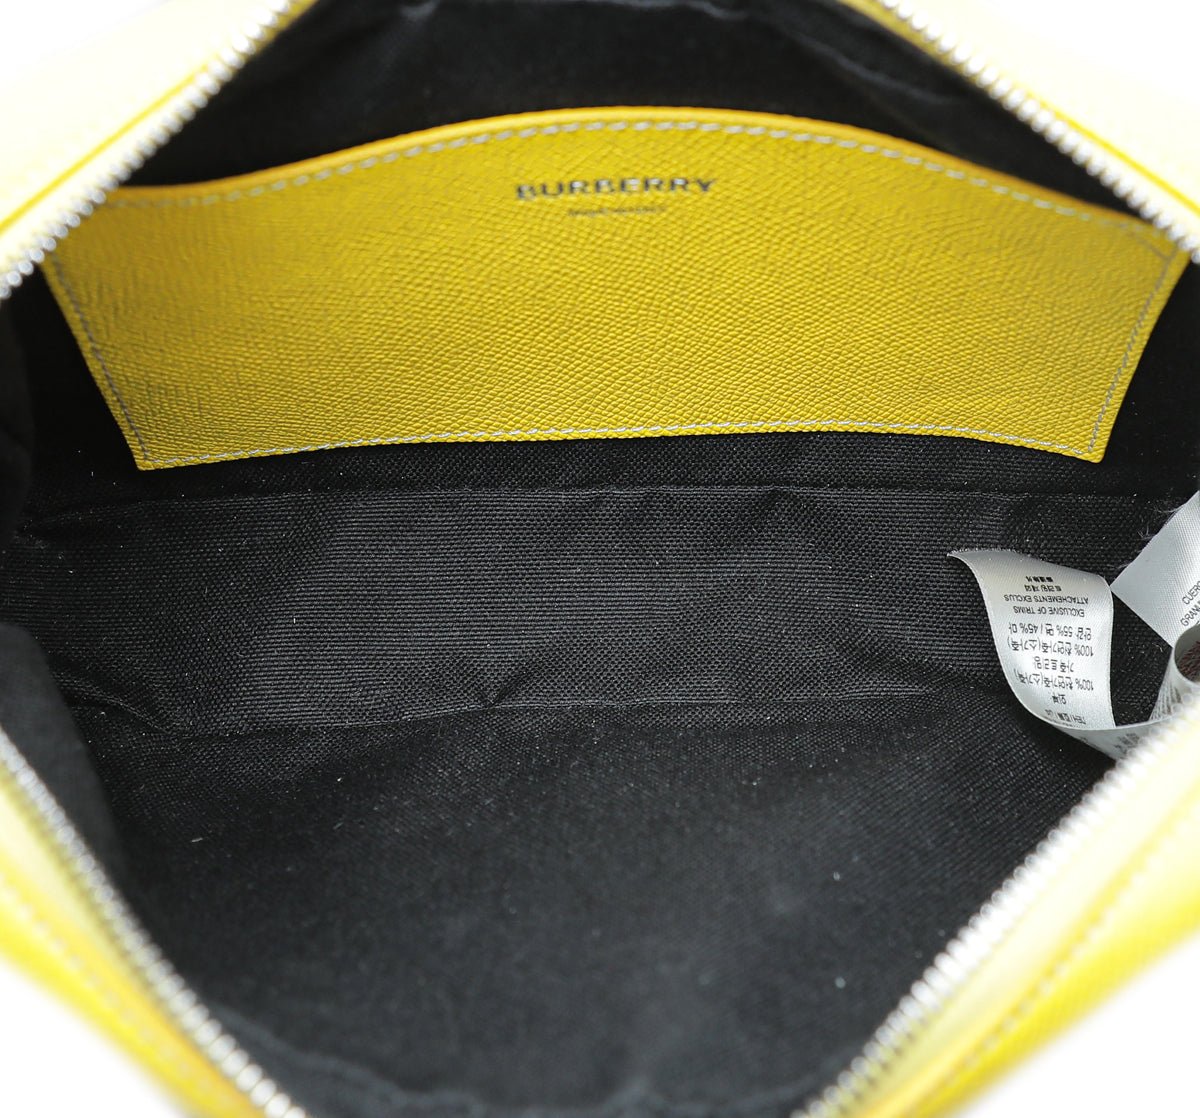 Burberry Check  Leather Small Crossbody Bag Tan  Small crossbody bag Burberry  handbags Crossbody bag